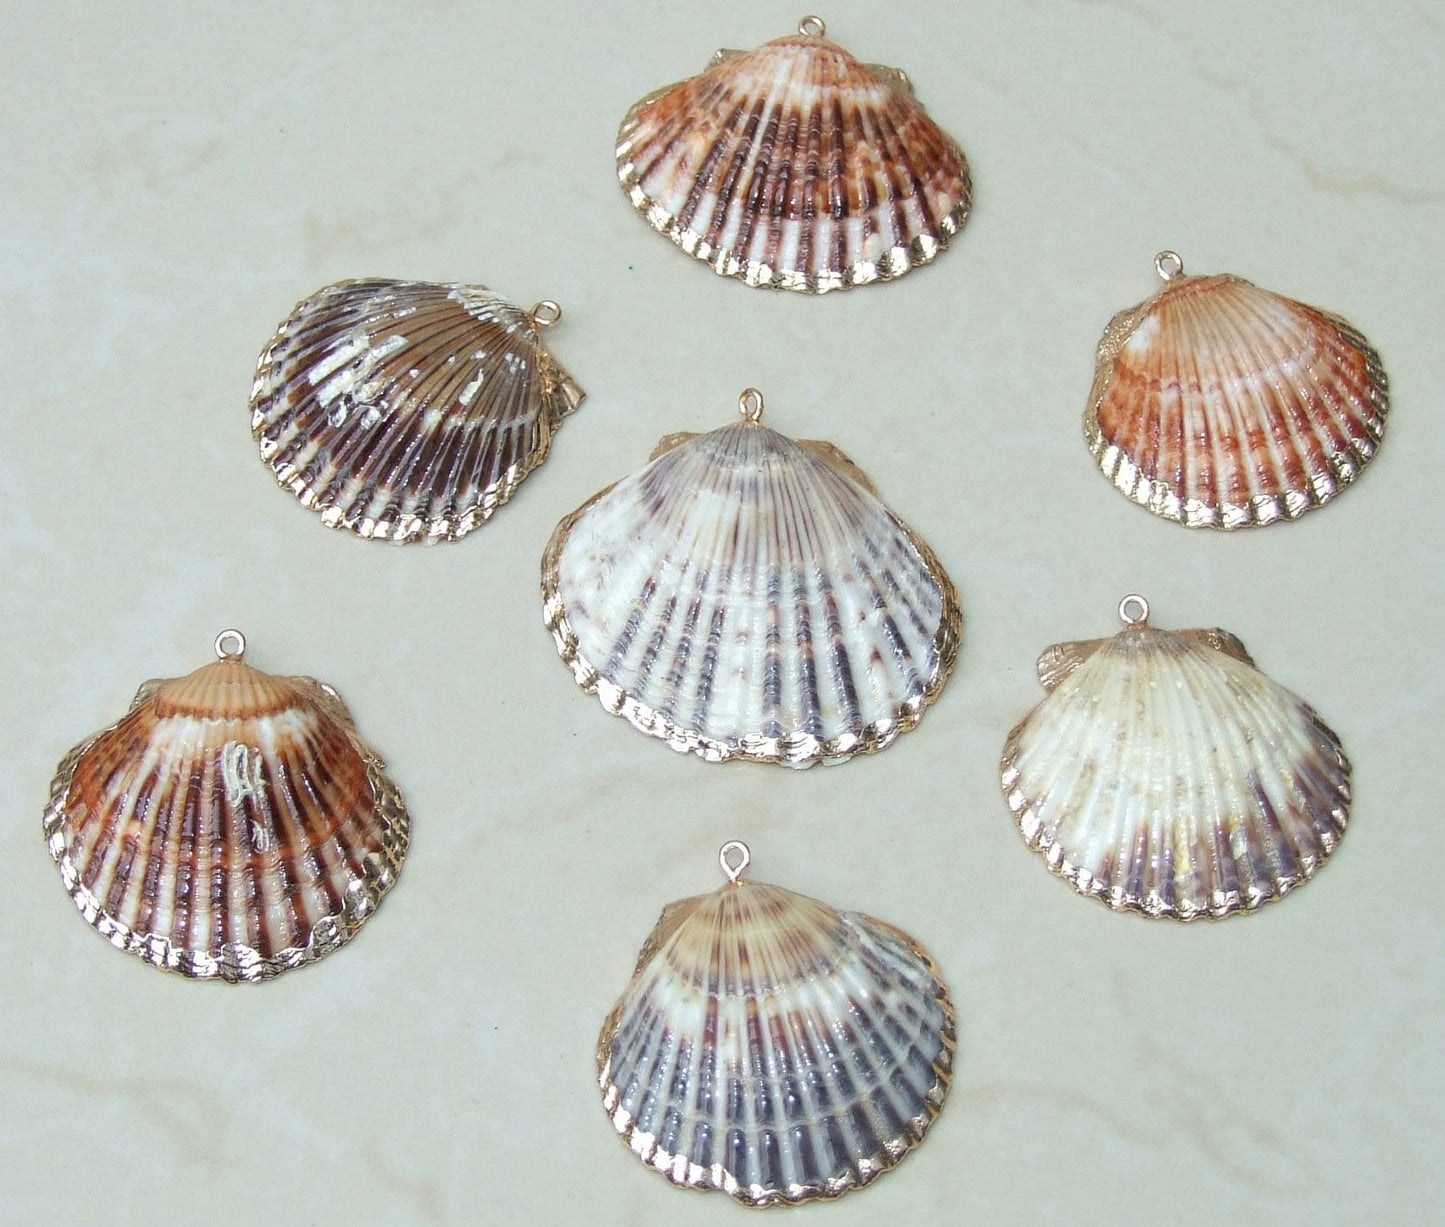 Natural Scallop Shell Pendant, Gold Edge Loop, Natural Seashell, Deep Sea Shell, Shell Necklace, Beach Jewelry, Ocean Seashell, 37-48mm NB